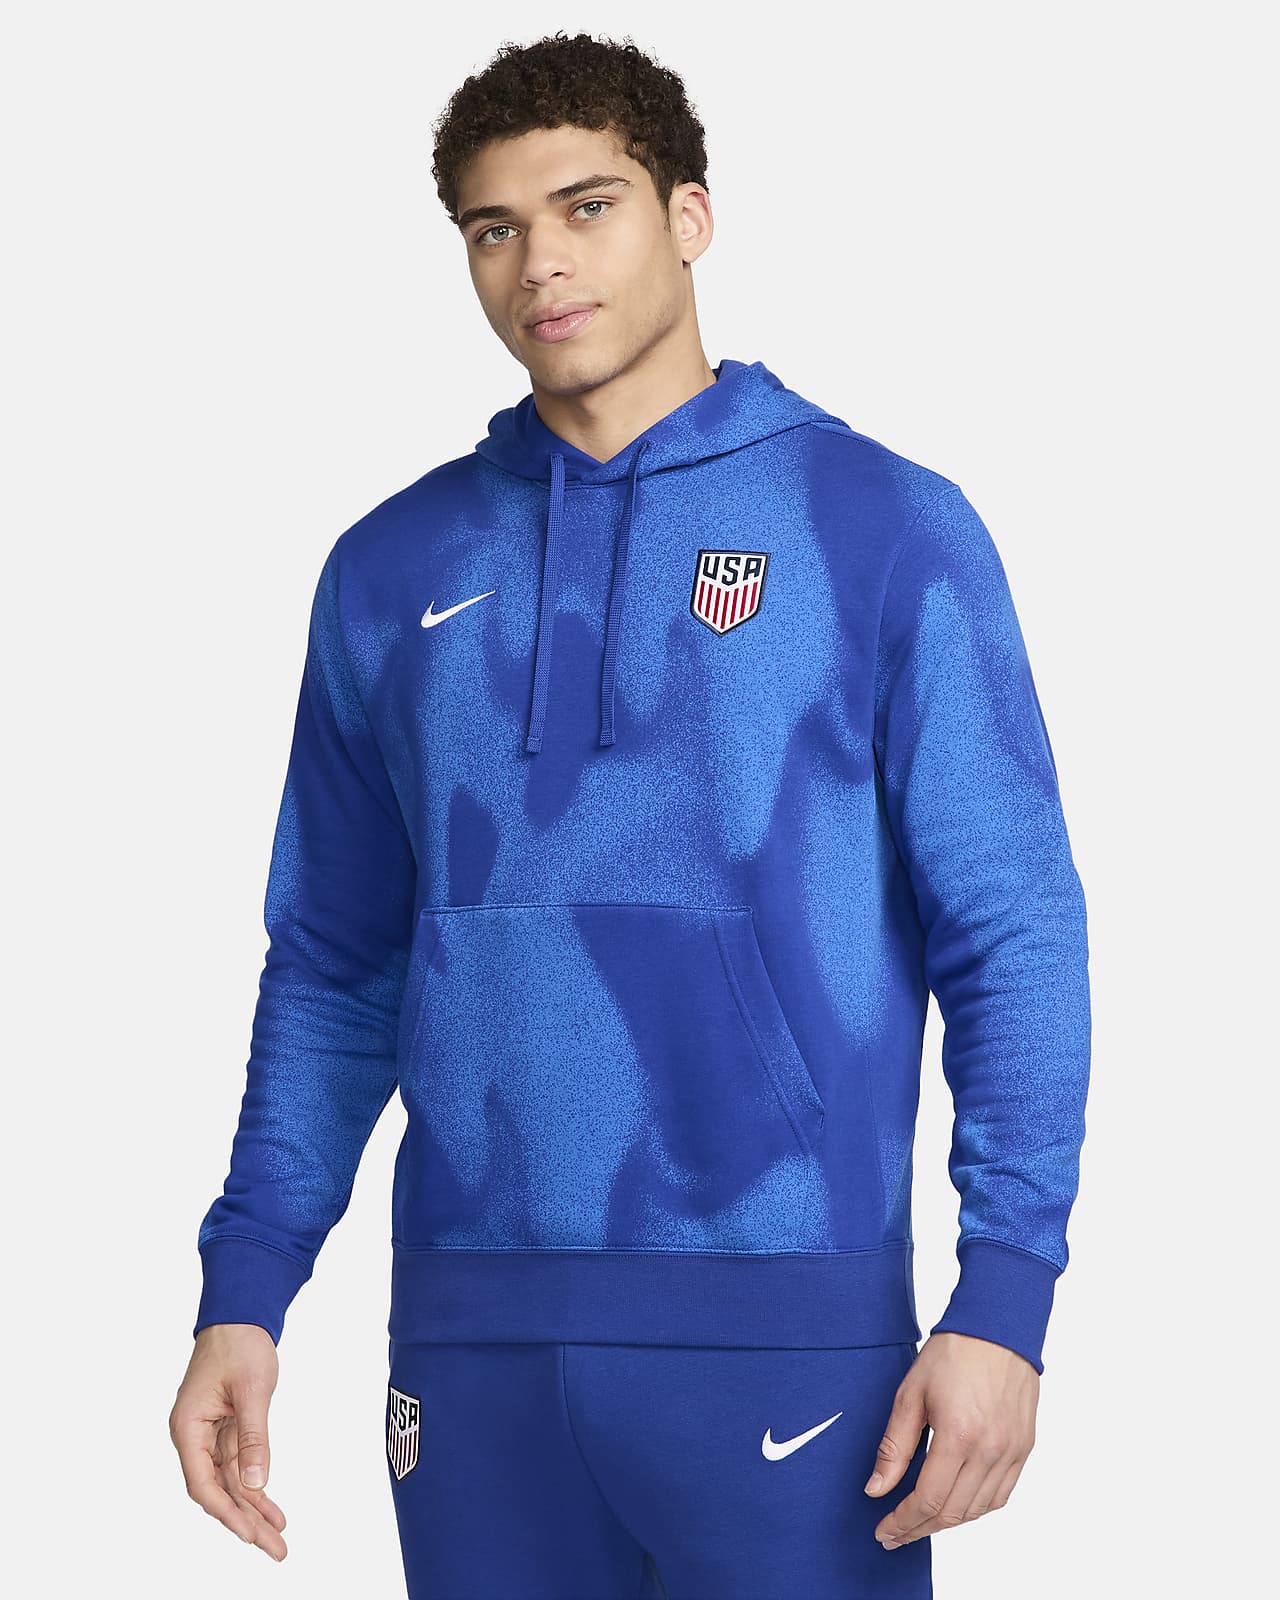 USMNT Club Men's Nike Soccer Pullover Hoodie